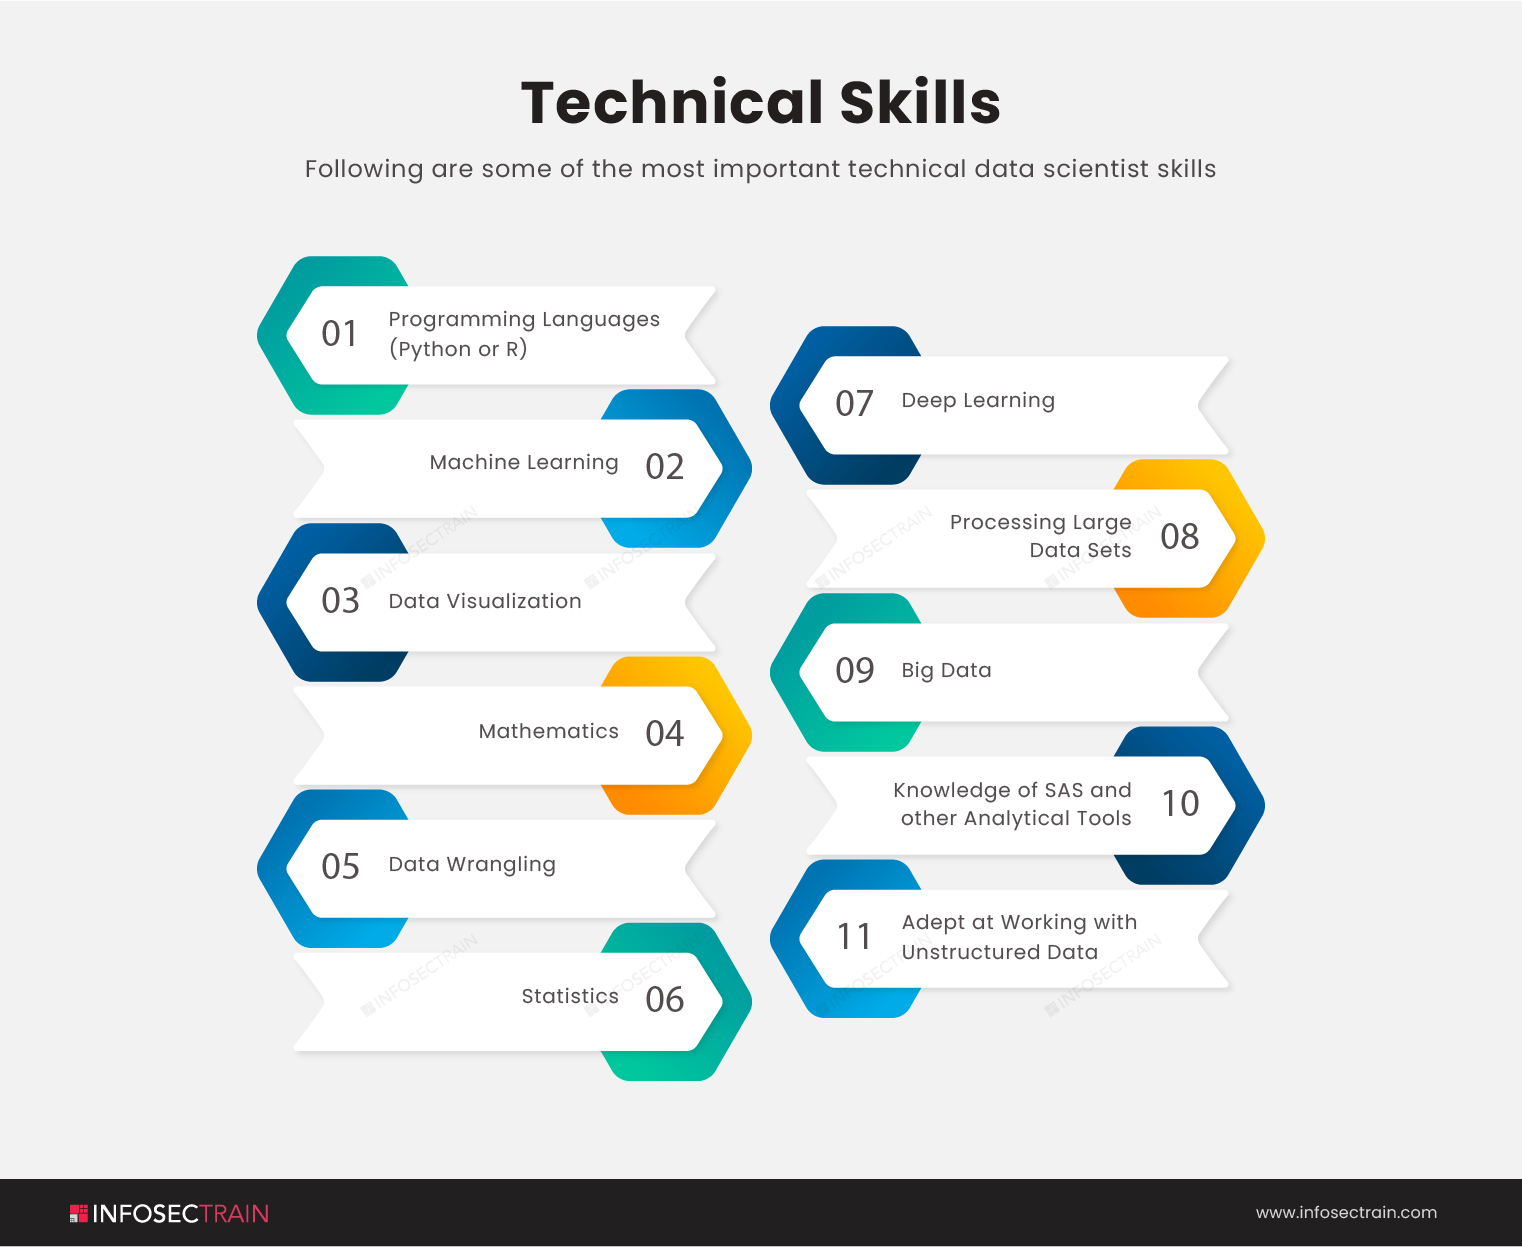 Technical skills